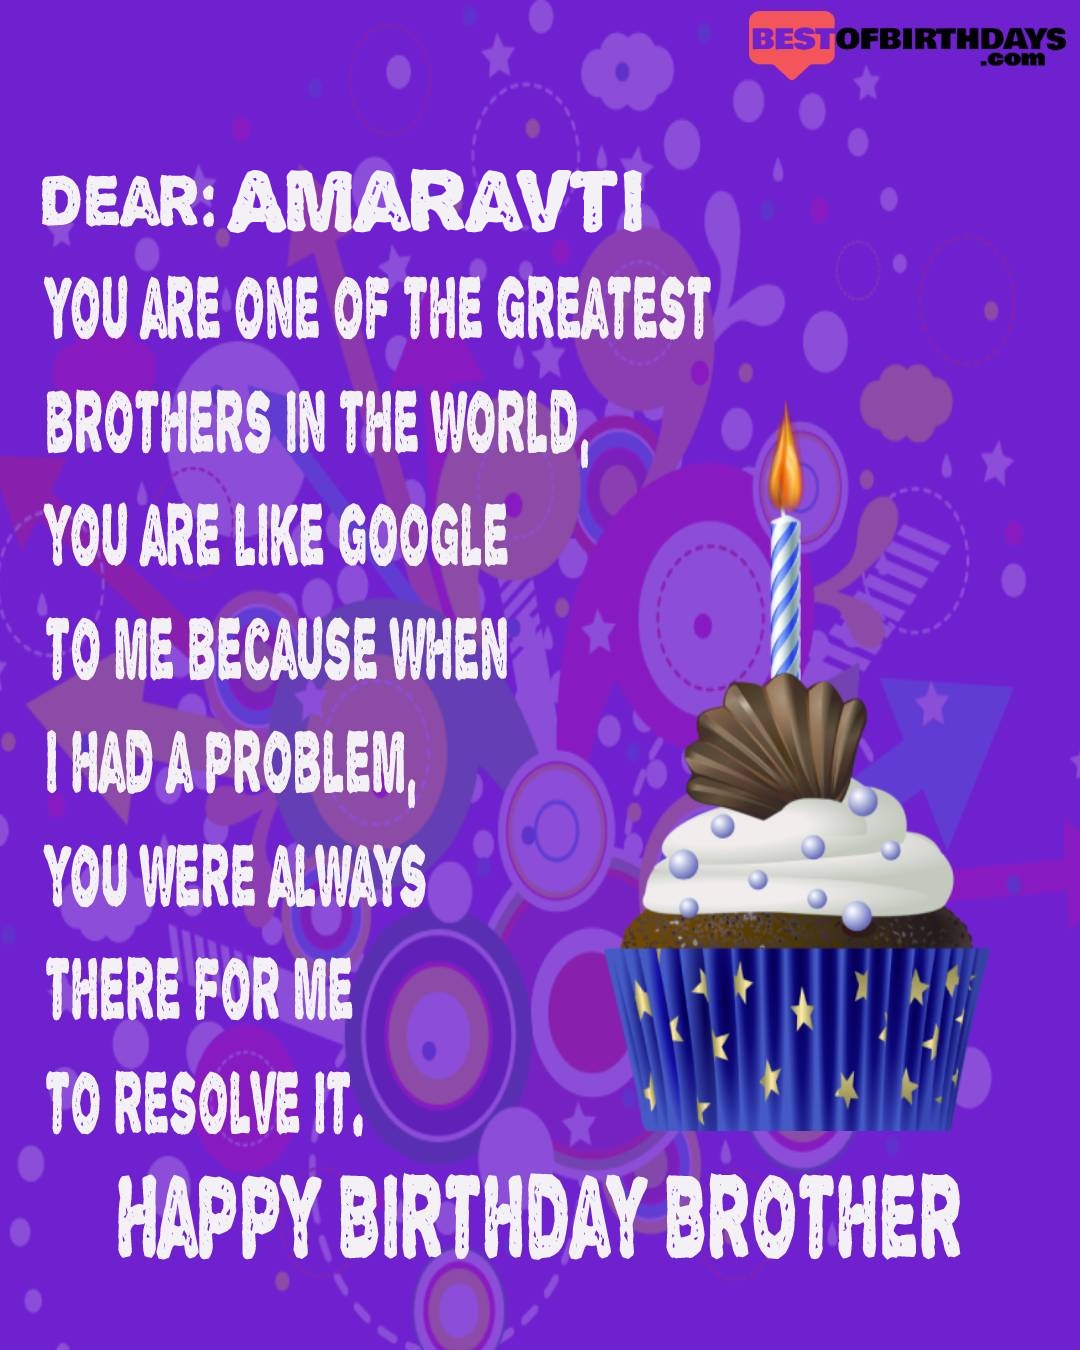 Happy birthday amaravti bhai brother bro